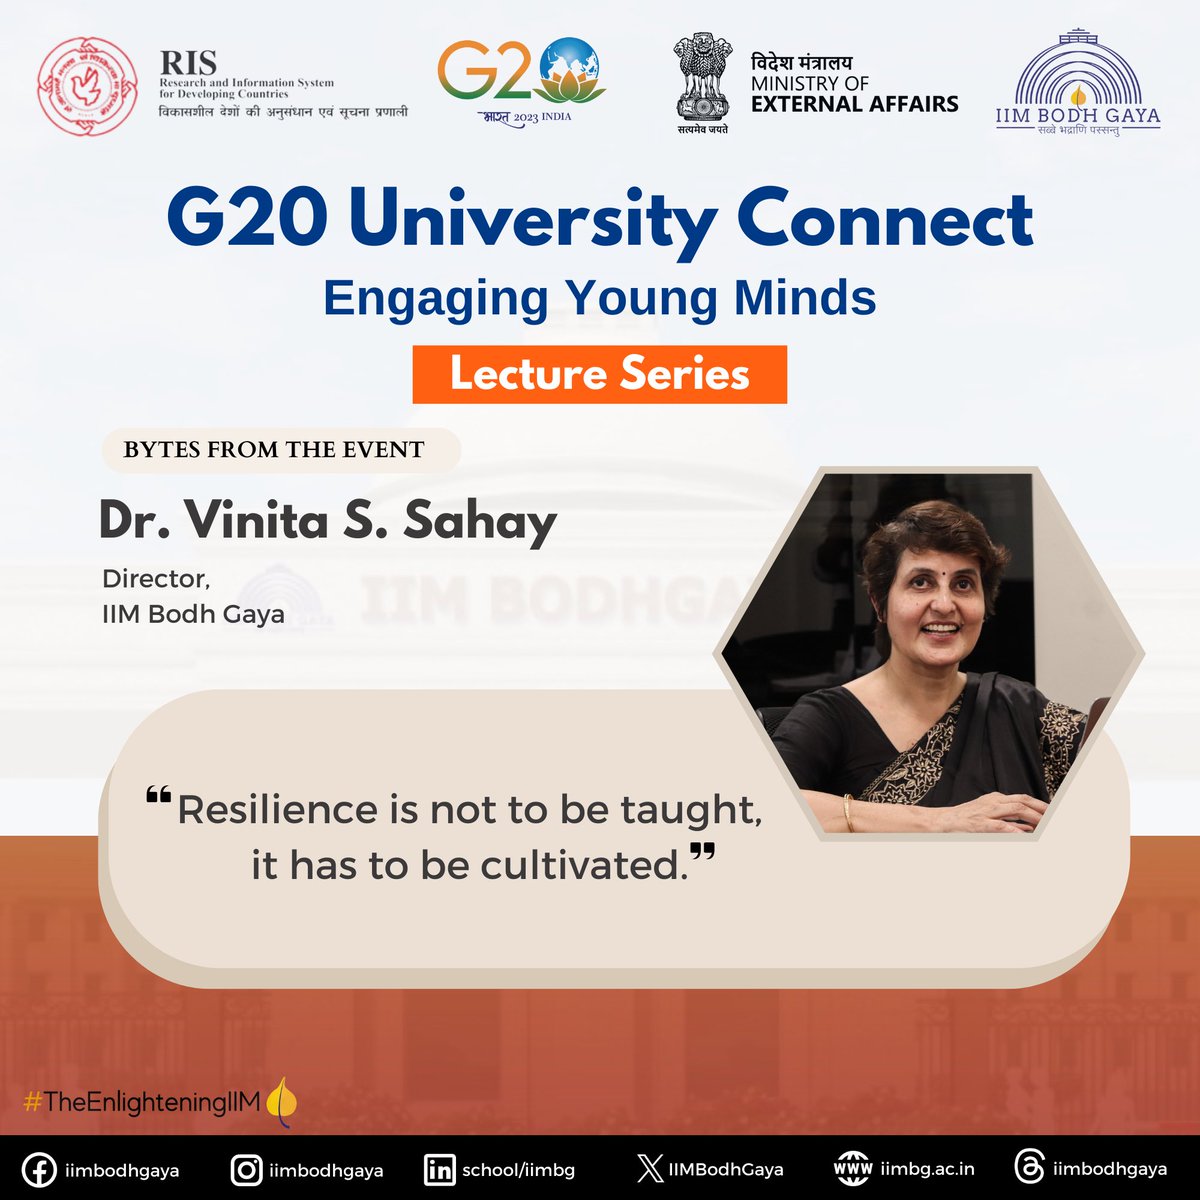 Professor Vinita S. Sahay, the Director, IIM Bodh Gaya addressed the G20 Lecture Series and emphasized the importance of persistence.

#G20 #Universityconnect #moe #NarendraModi #guestlecture #innovation #G20India2023 #G20India #G20Summit #iimbodhgaya #ipm #emergingcareers #mba